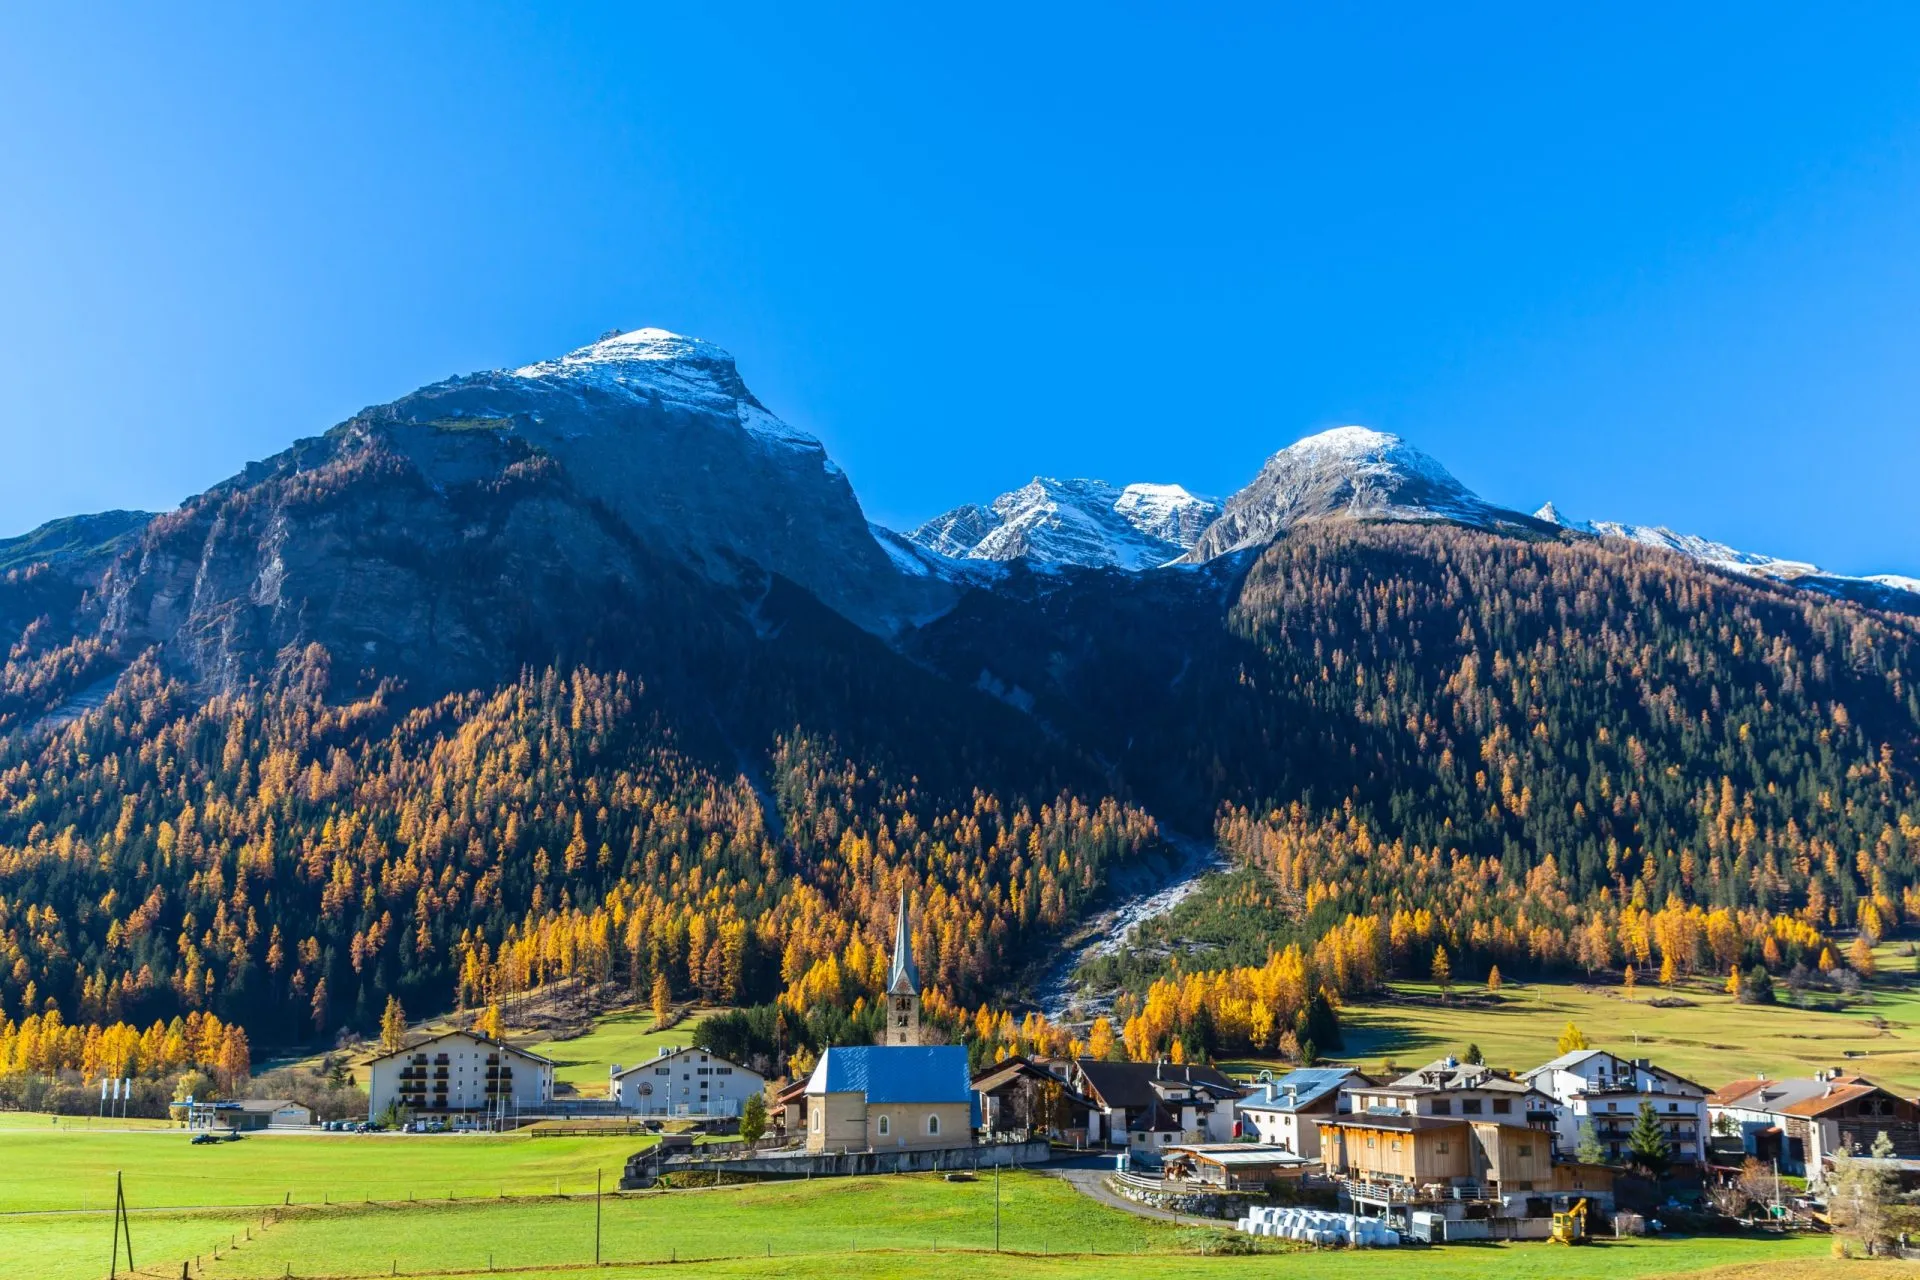 Start and end the trek in idyllic Swiss villages